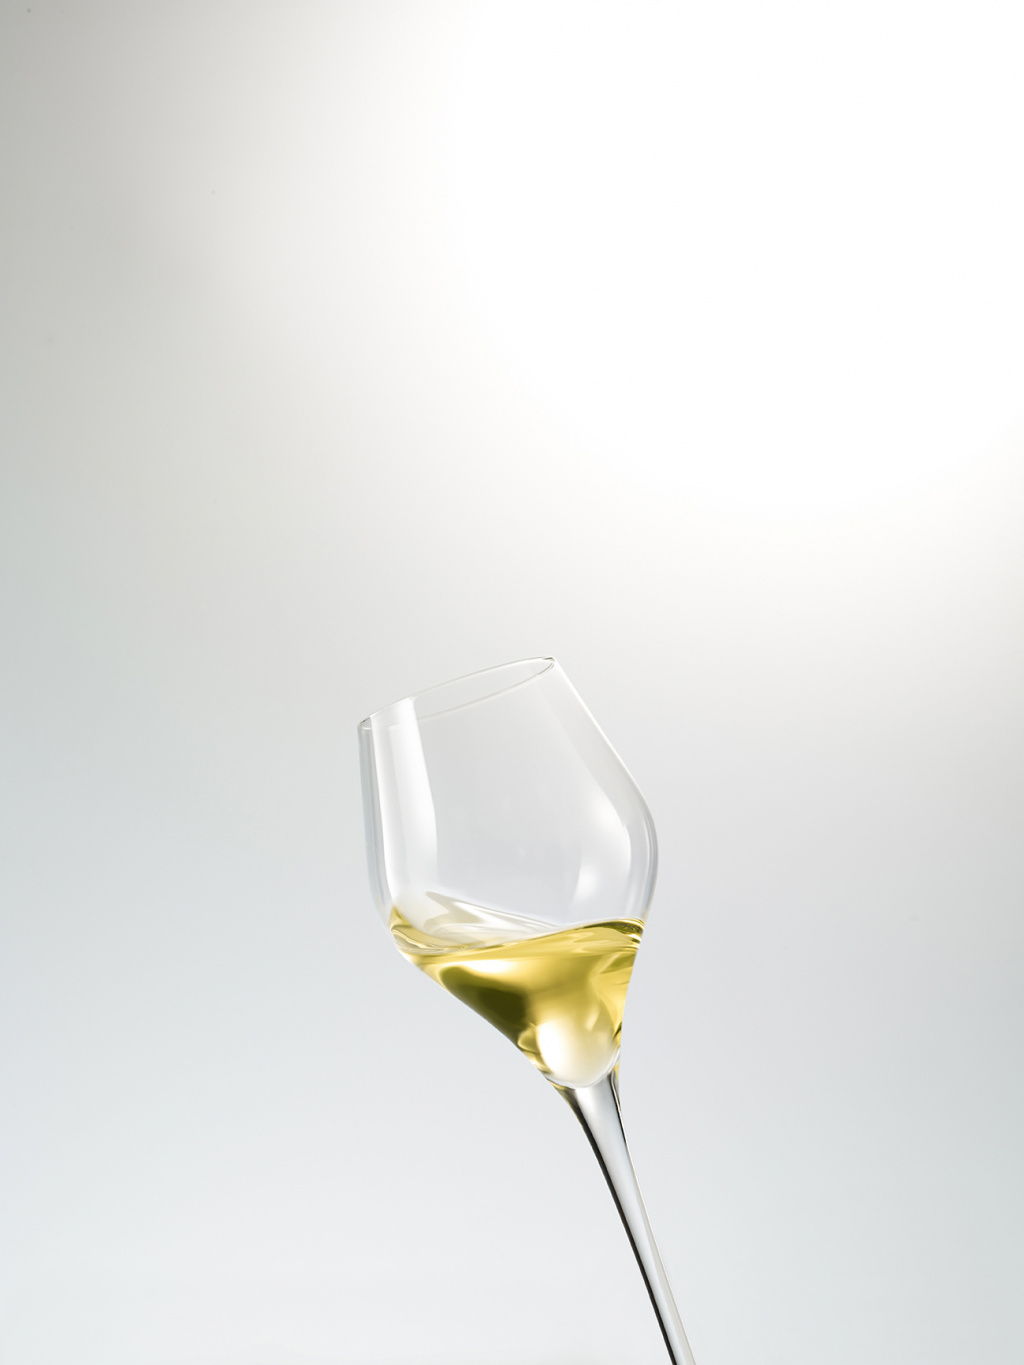 Schott Zwiesel Schott Zwiesel Finesse Chardonnay wijnglas 0 - 0.39 Ltr - 6 stuks